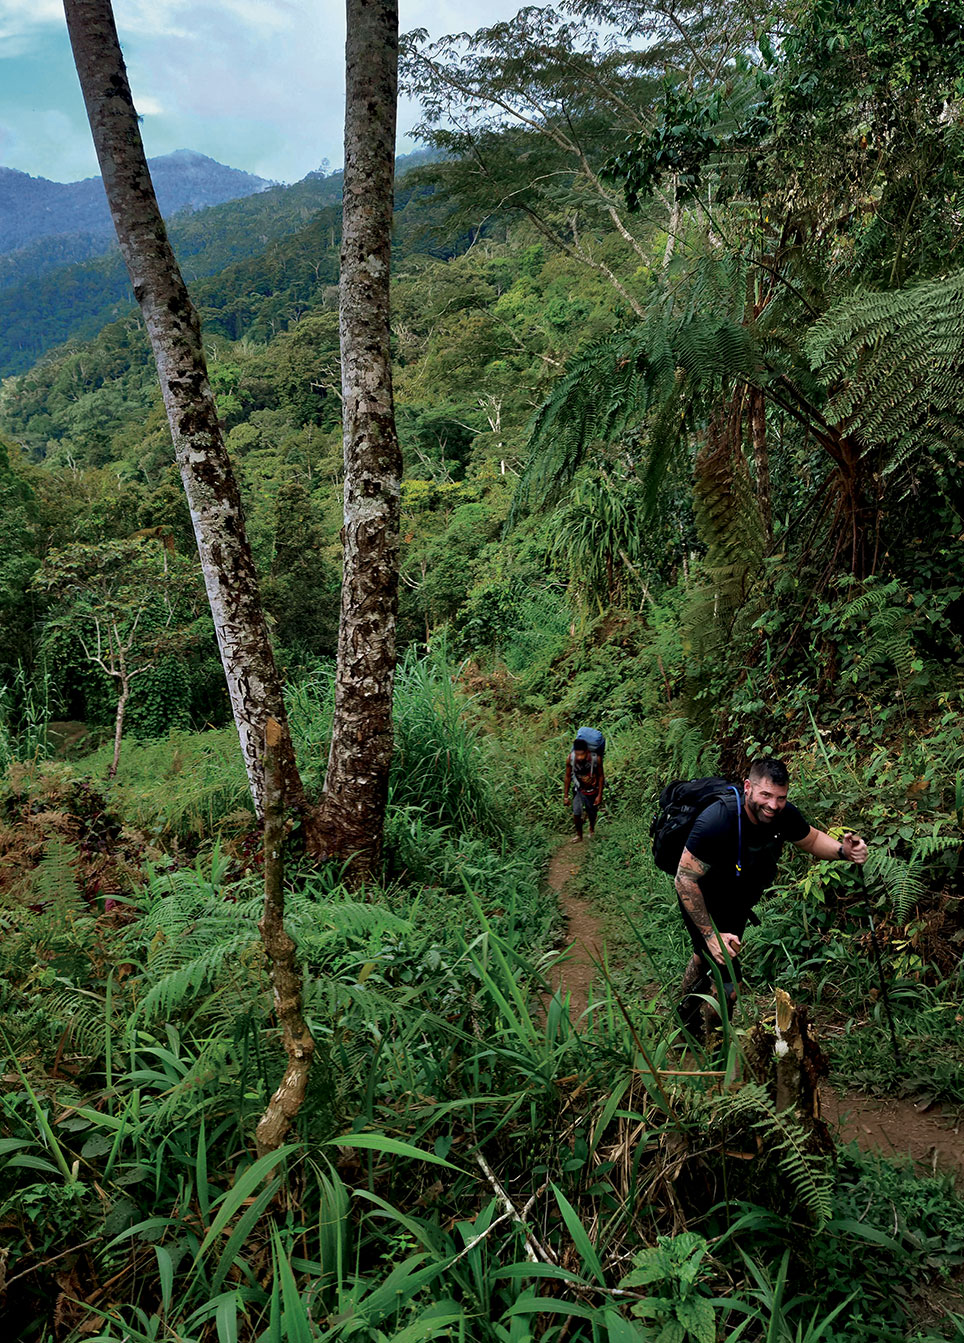 Man in black t-shirt using hiking sticks to climb a steep trail in a tropical jungle.